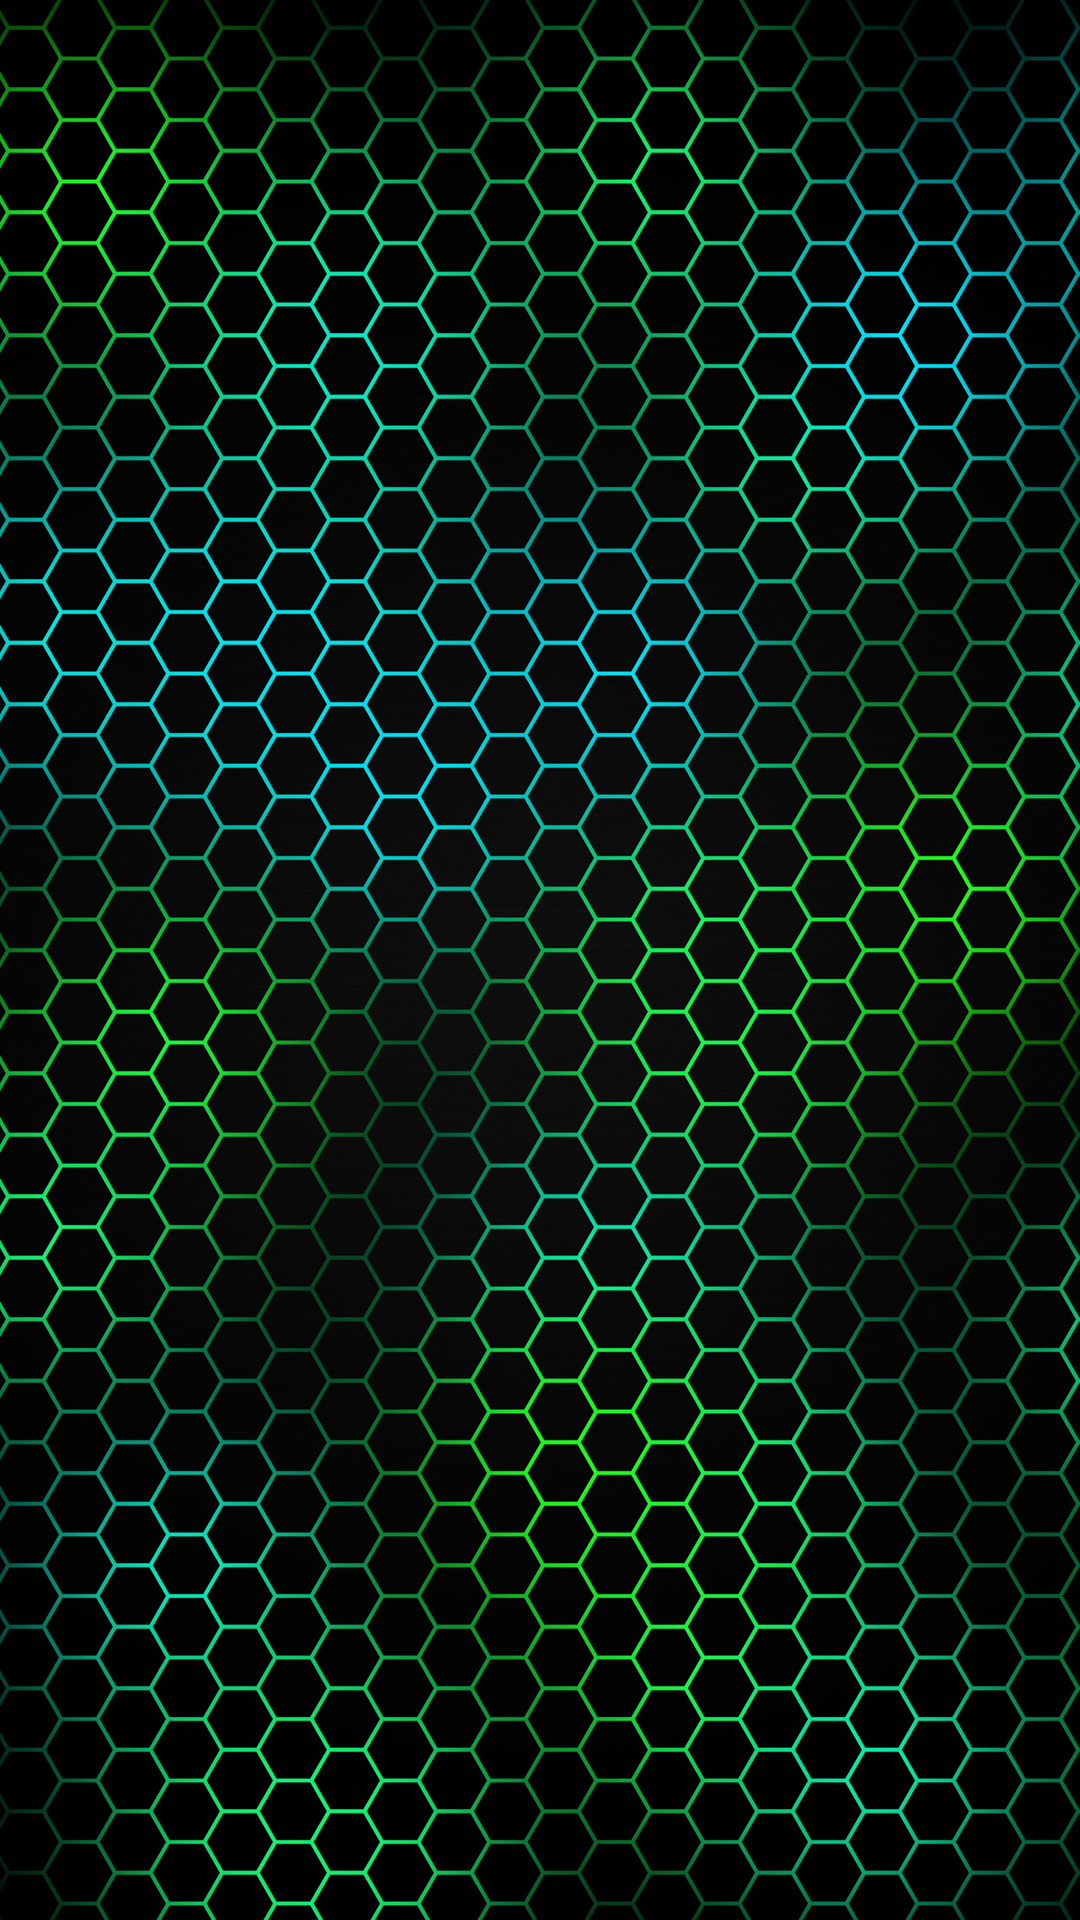 Blue And Green Hexagon Pattern Galaxy S4 Wallpaper